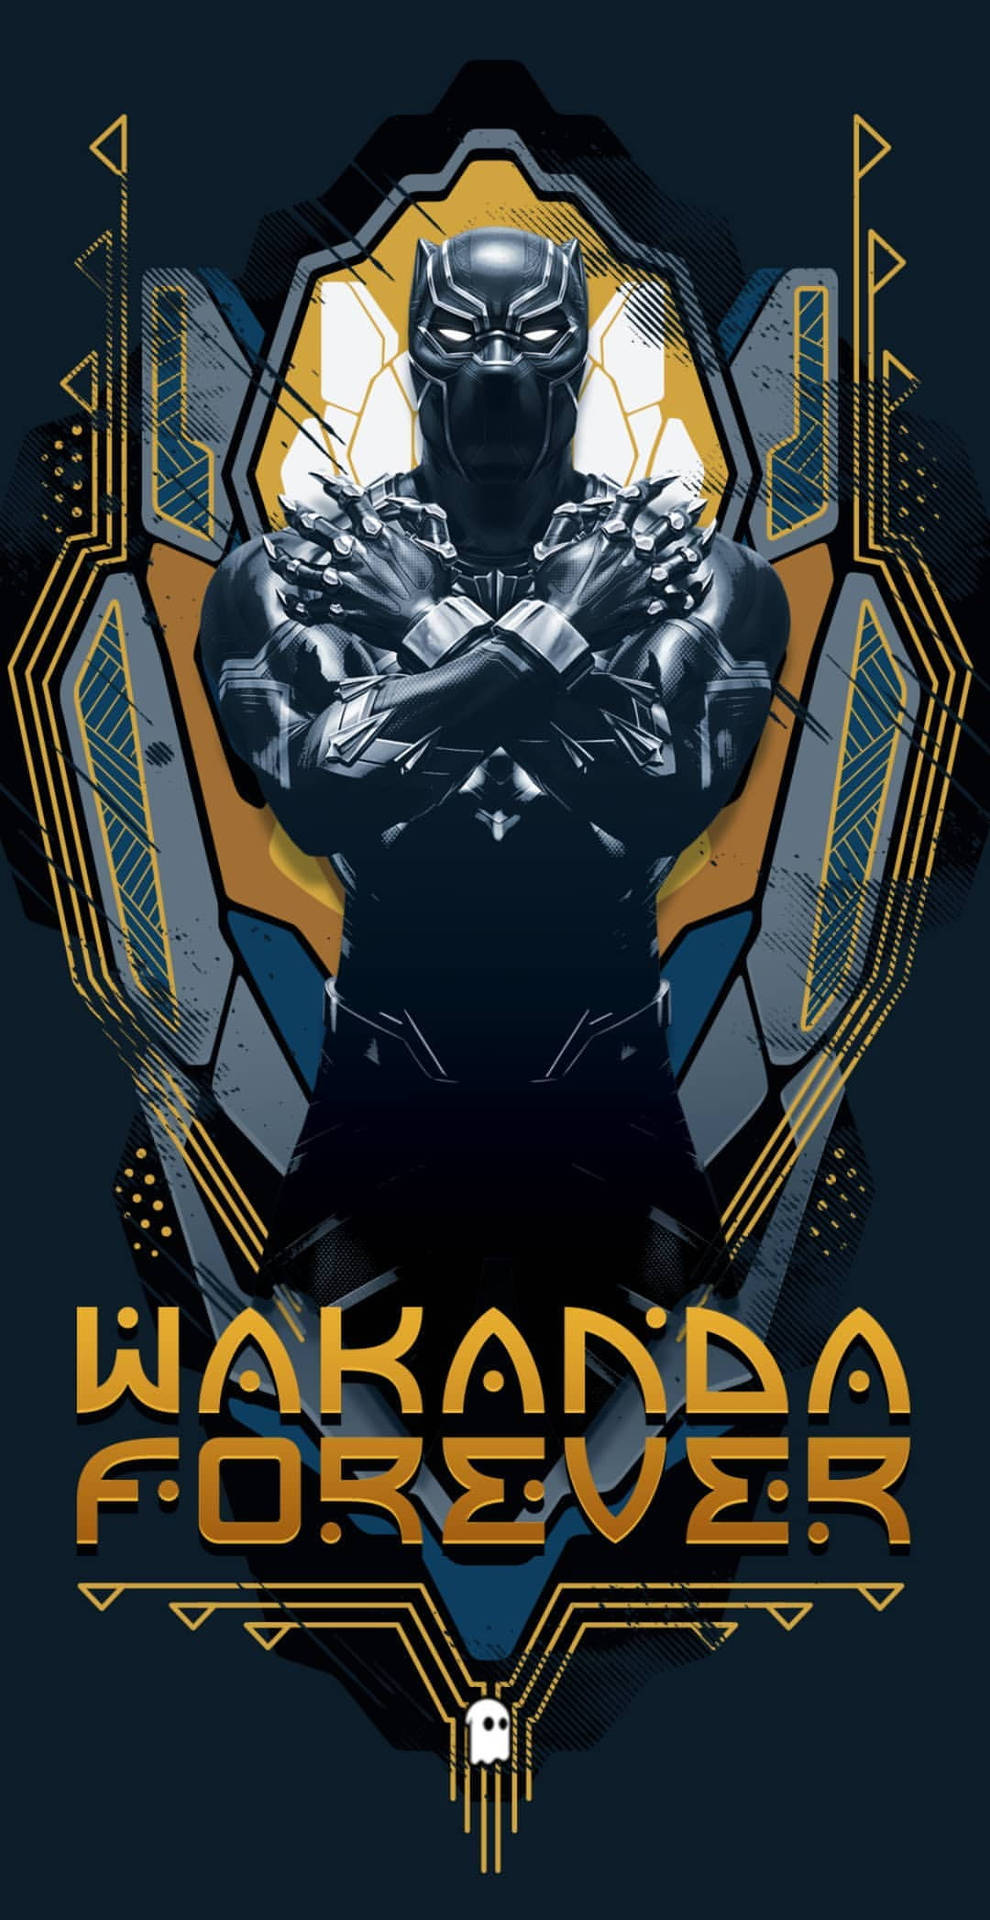 Cool Wakanda Forever Digital Art Wallpaper